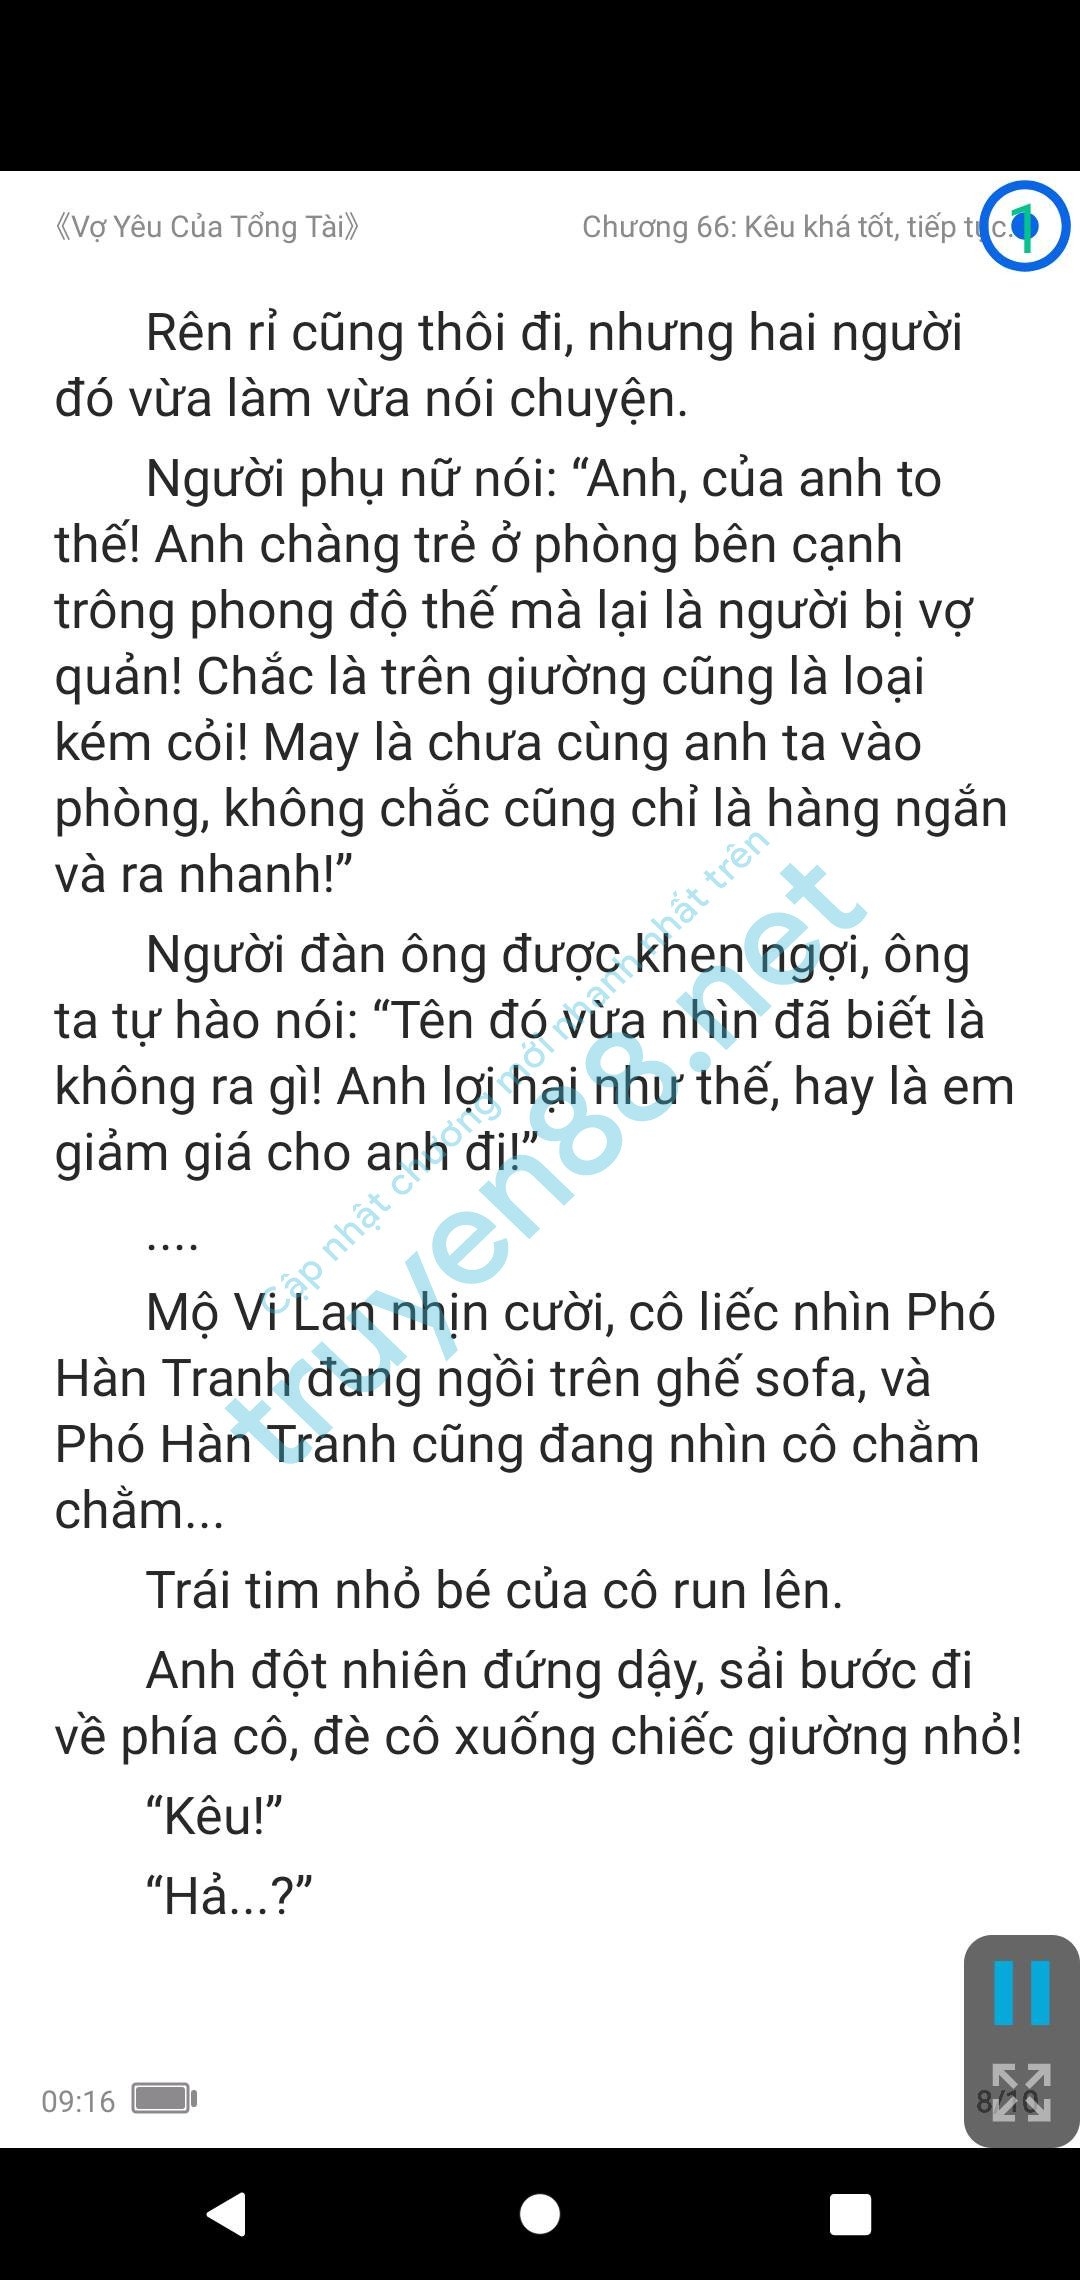 vo-yeu-cua-tong-tai-mo-vi-lan--pho-han-tranh-66-0